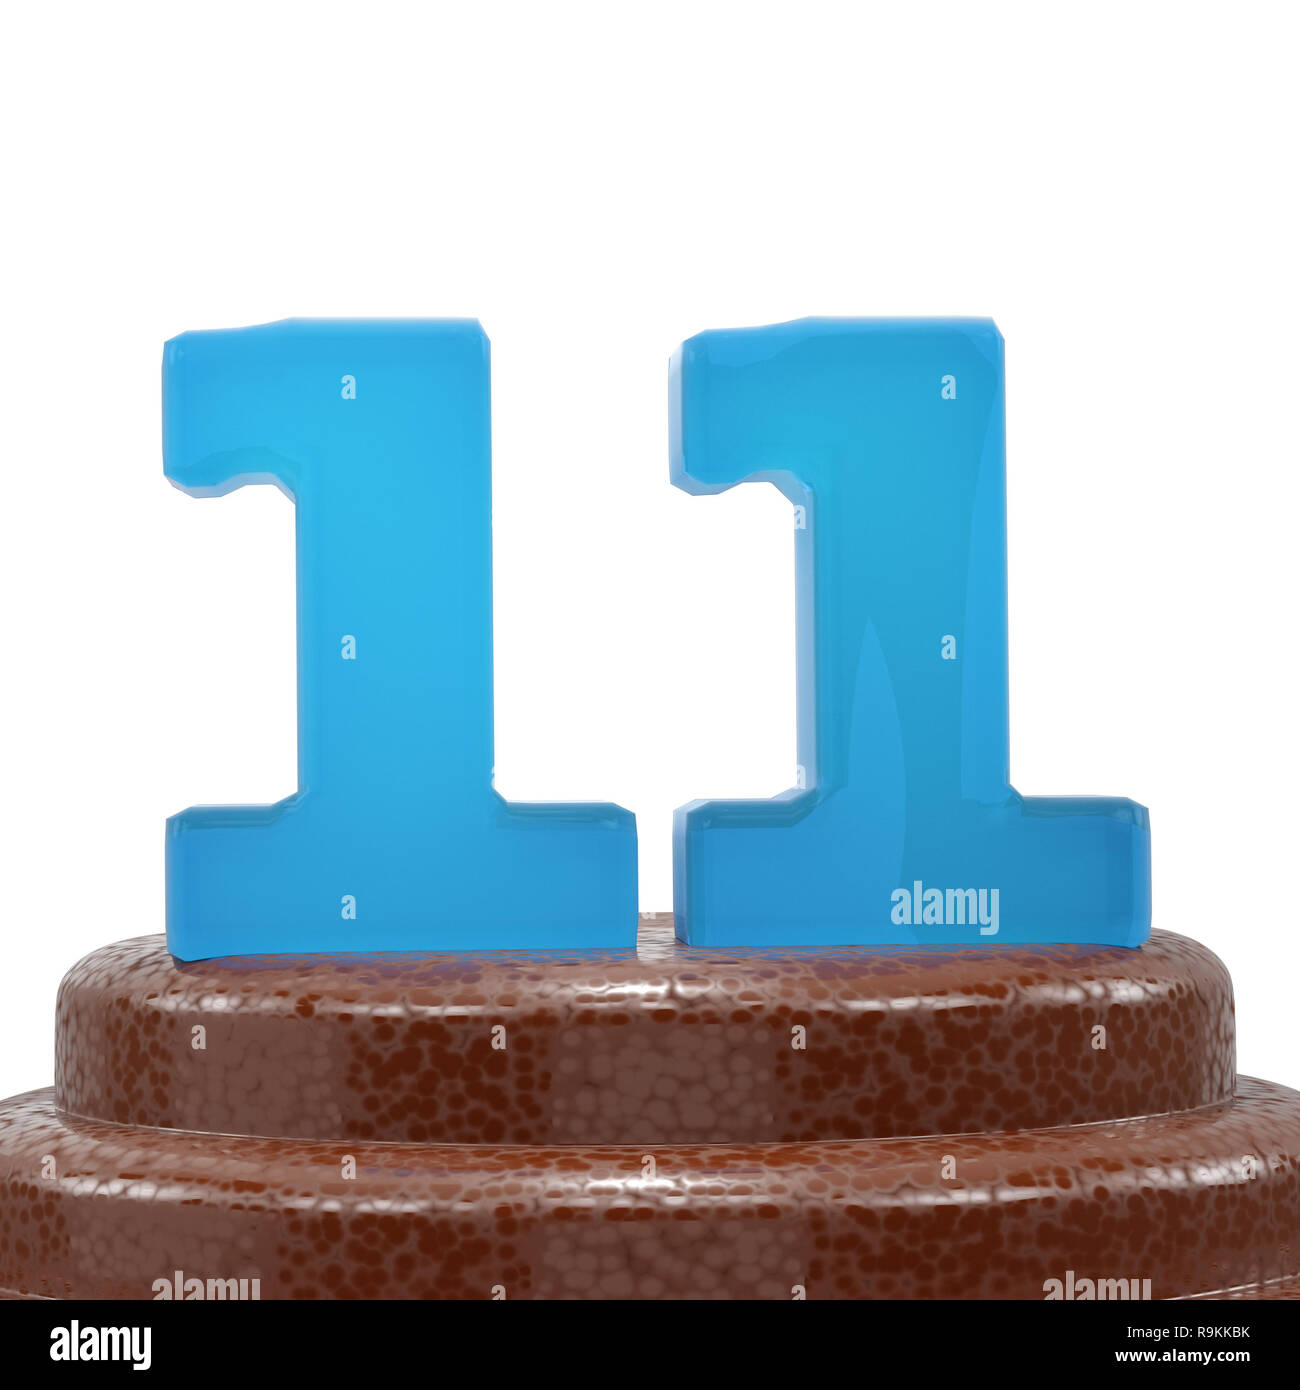 The 11 Best Birthday Cake Bakeries in Los Angeles - Grace & Lightness  Magazine